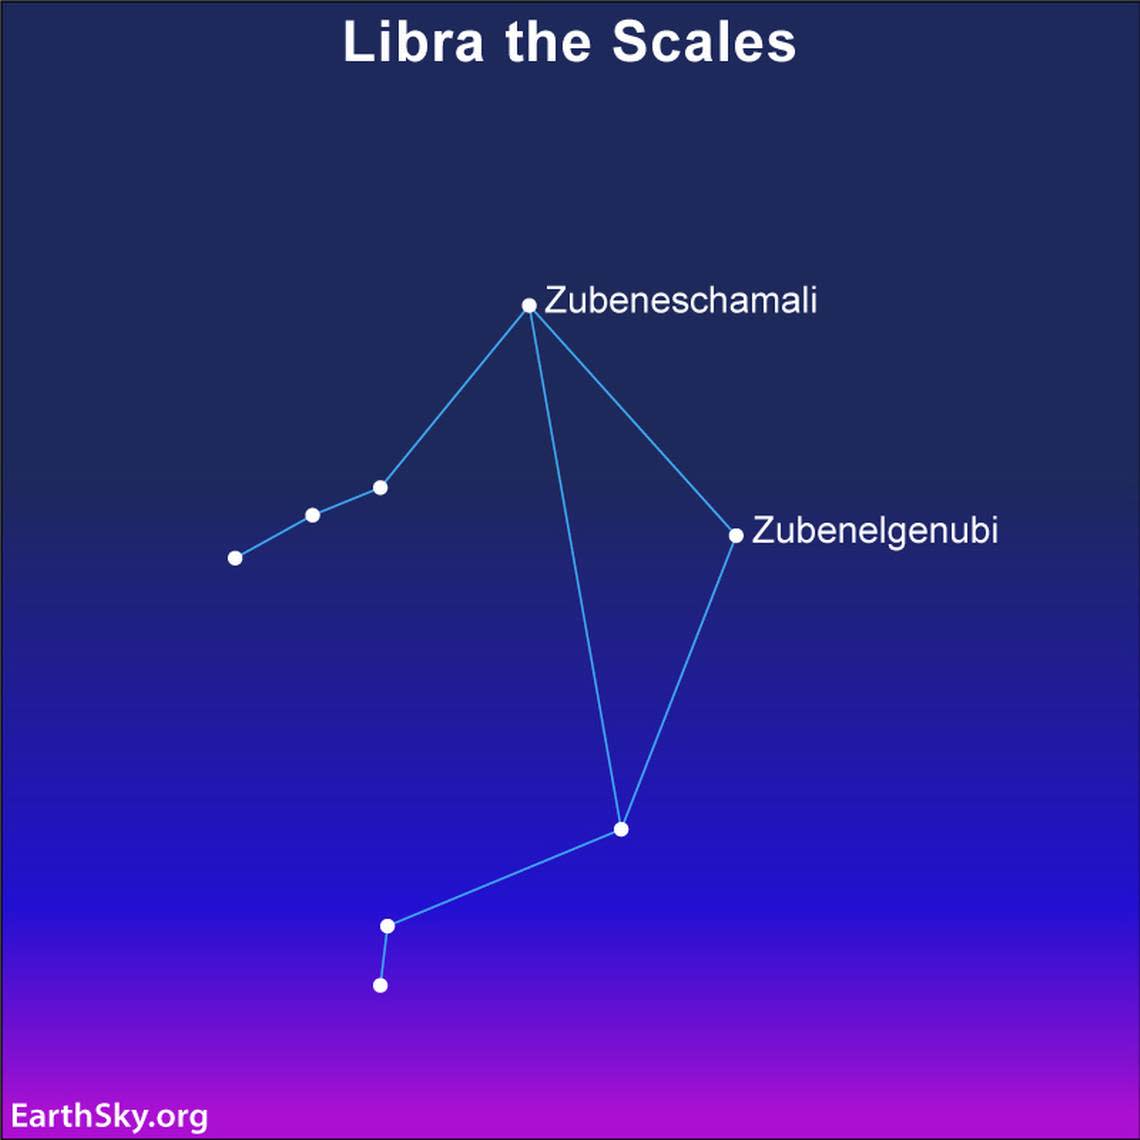 Libra the Scales is a zodiac constellation home to 2 stars with pleasing names: Zubeneschamali and Zubenelgenubi.